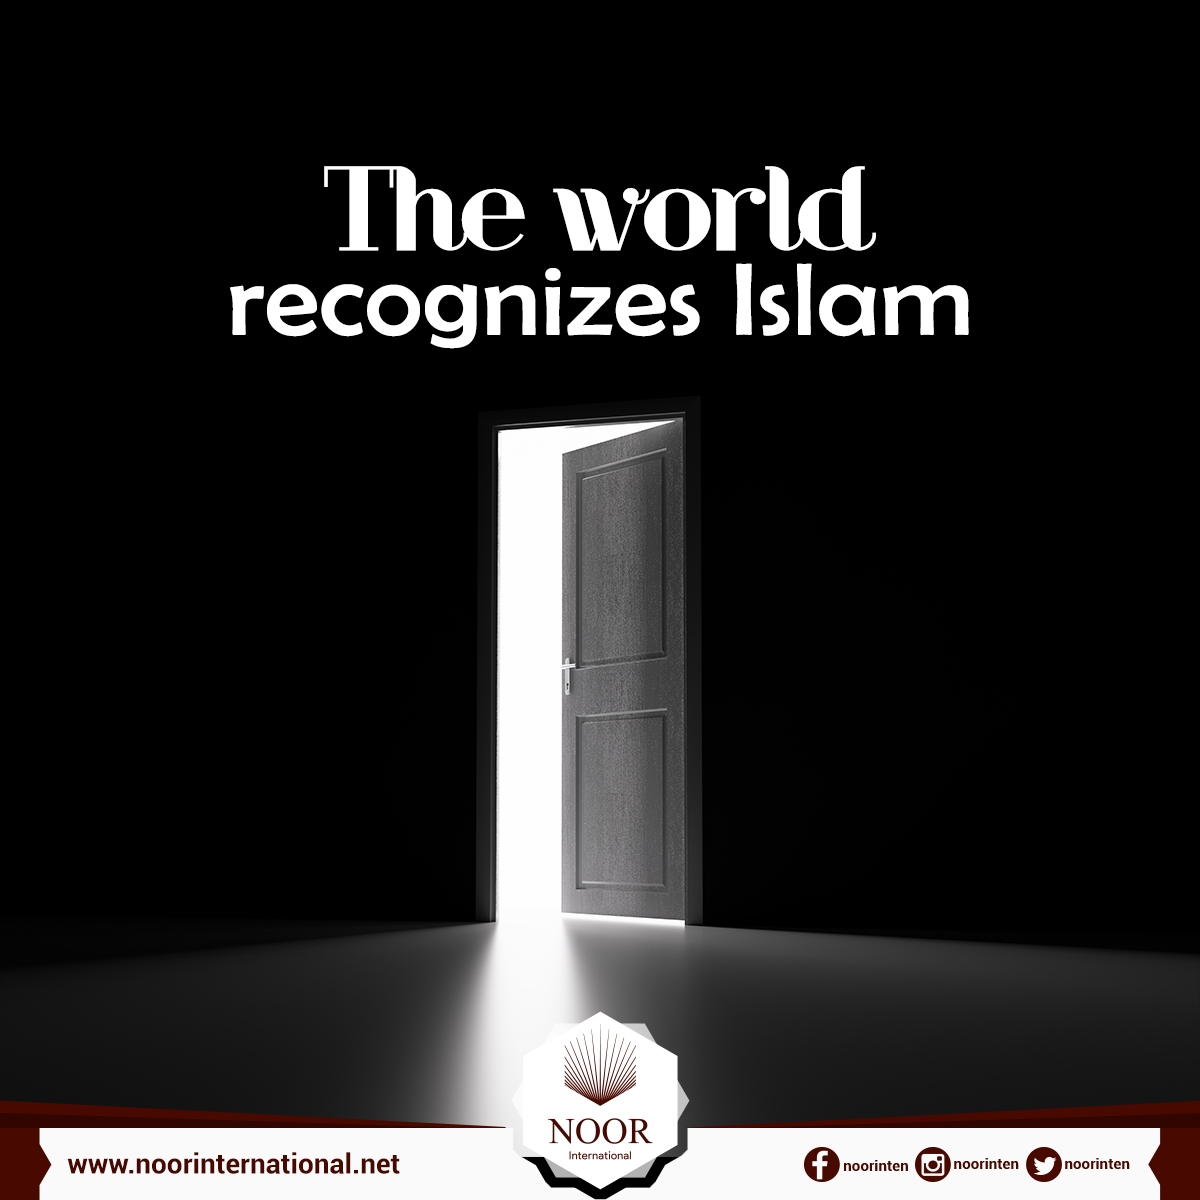 The world recognizes Islam